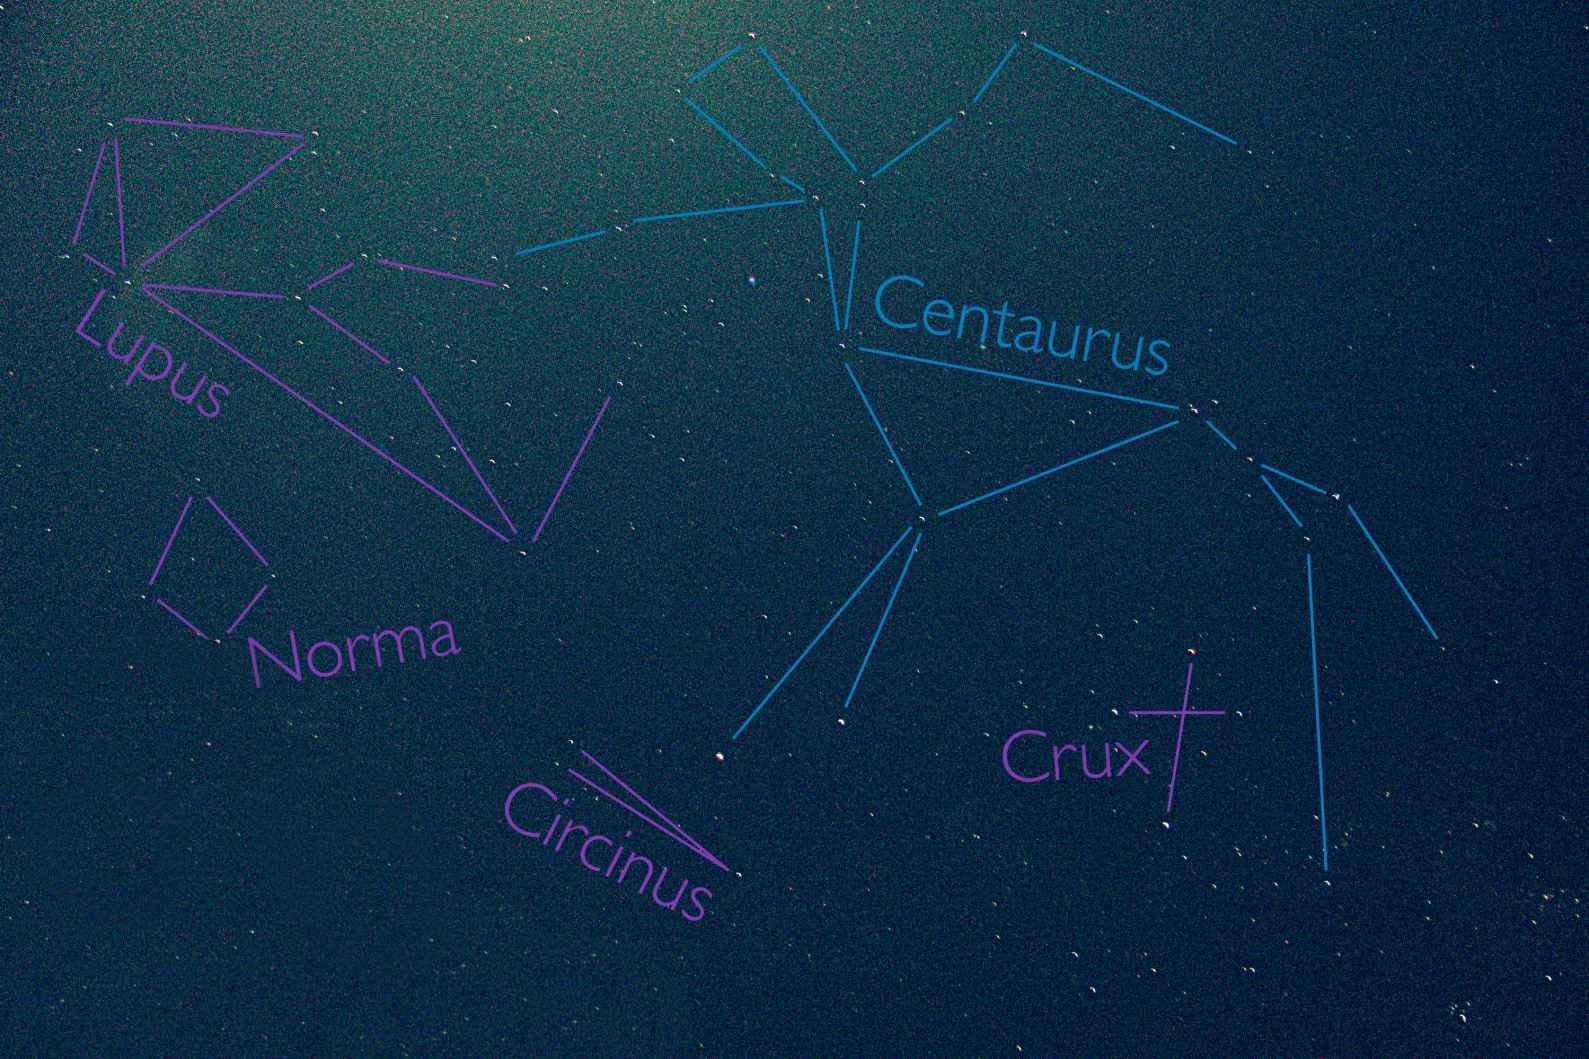 The constellation Centaurus